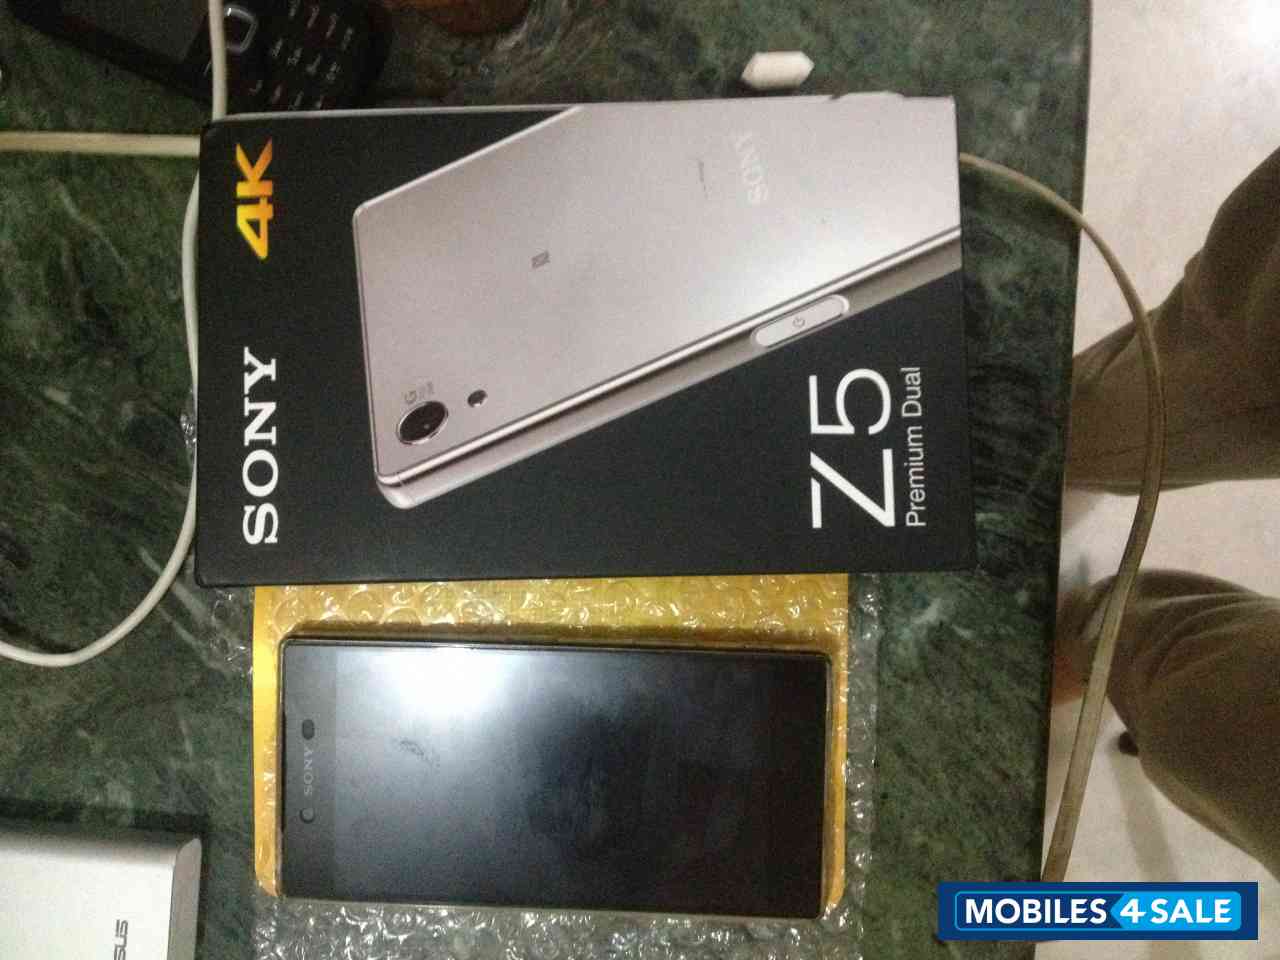 Chrome Sony Xperia Z5 Premium